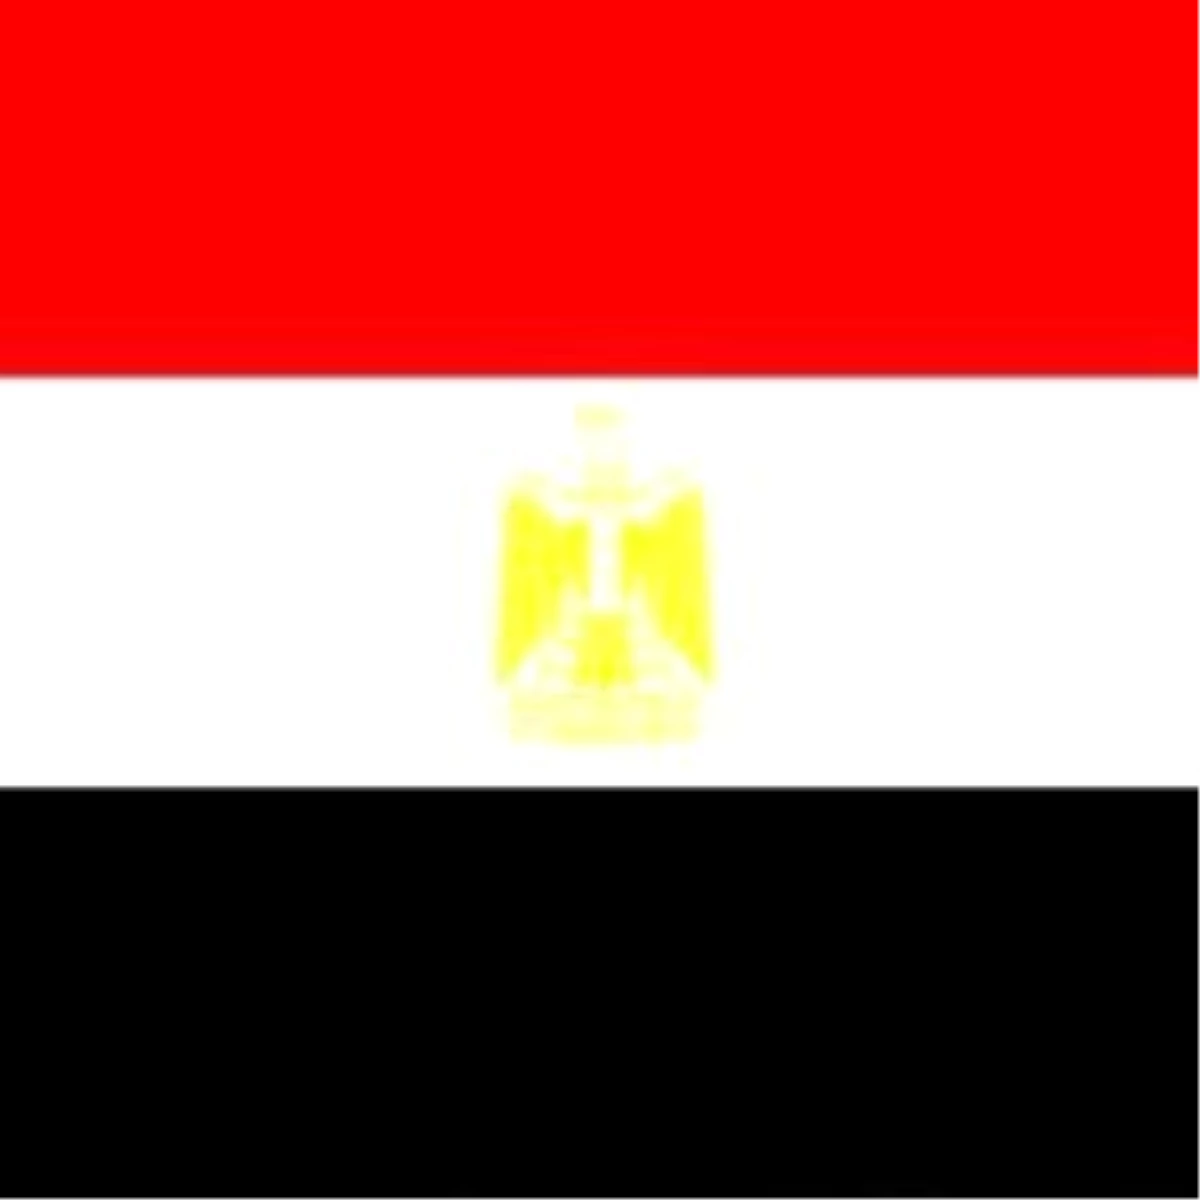 Mısır Cumhurbaşkanlığı Sözcüsü Ali Açıklaması